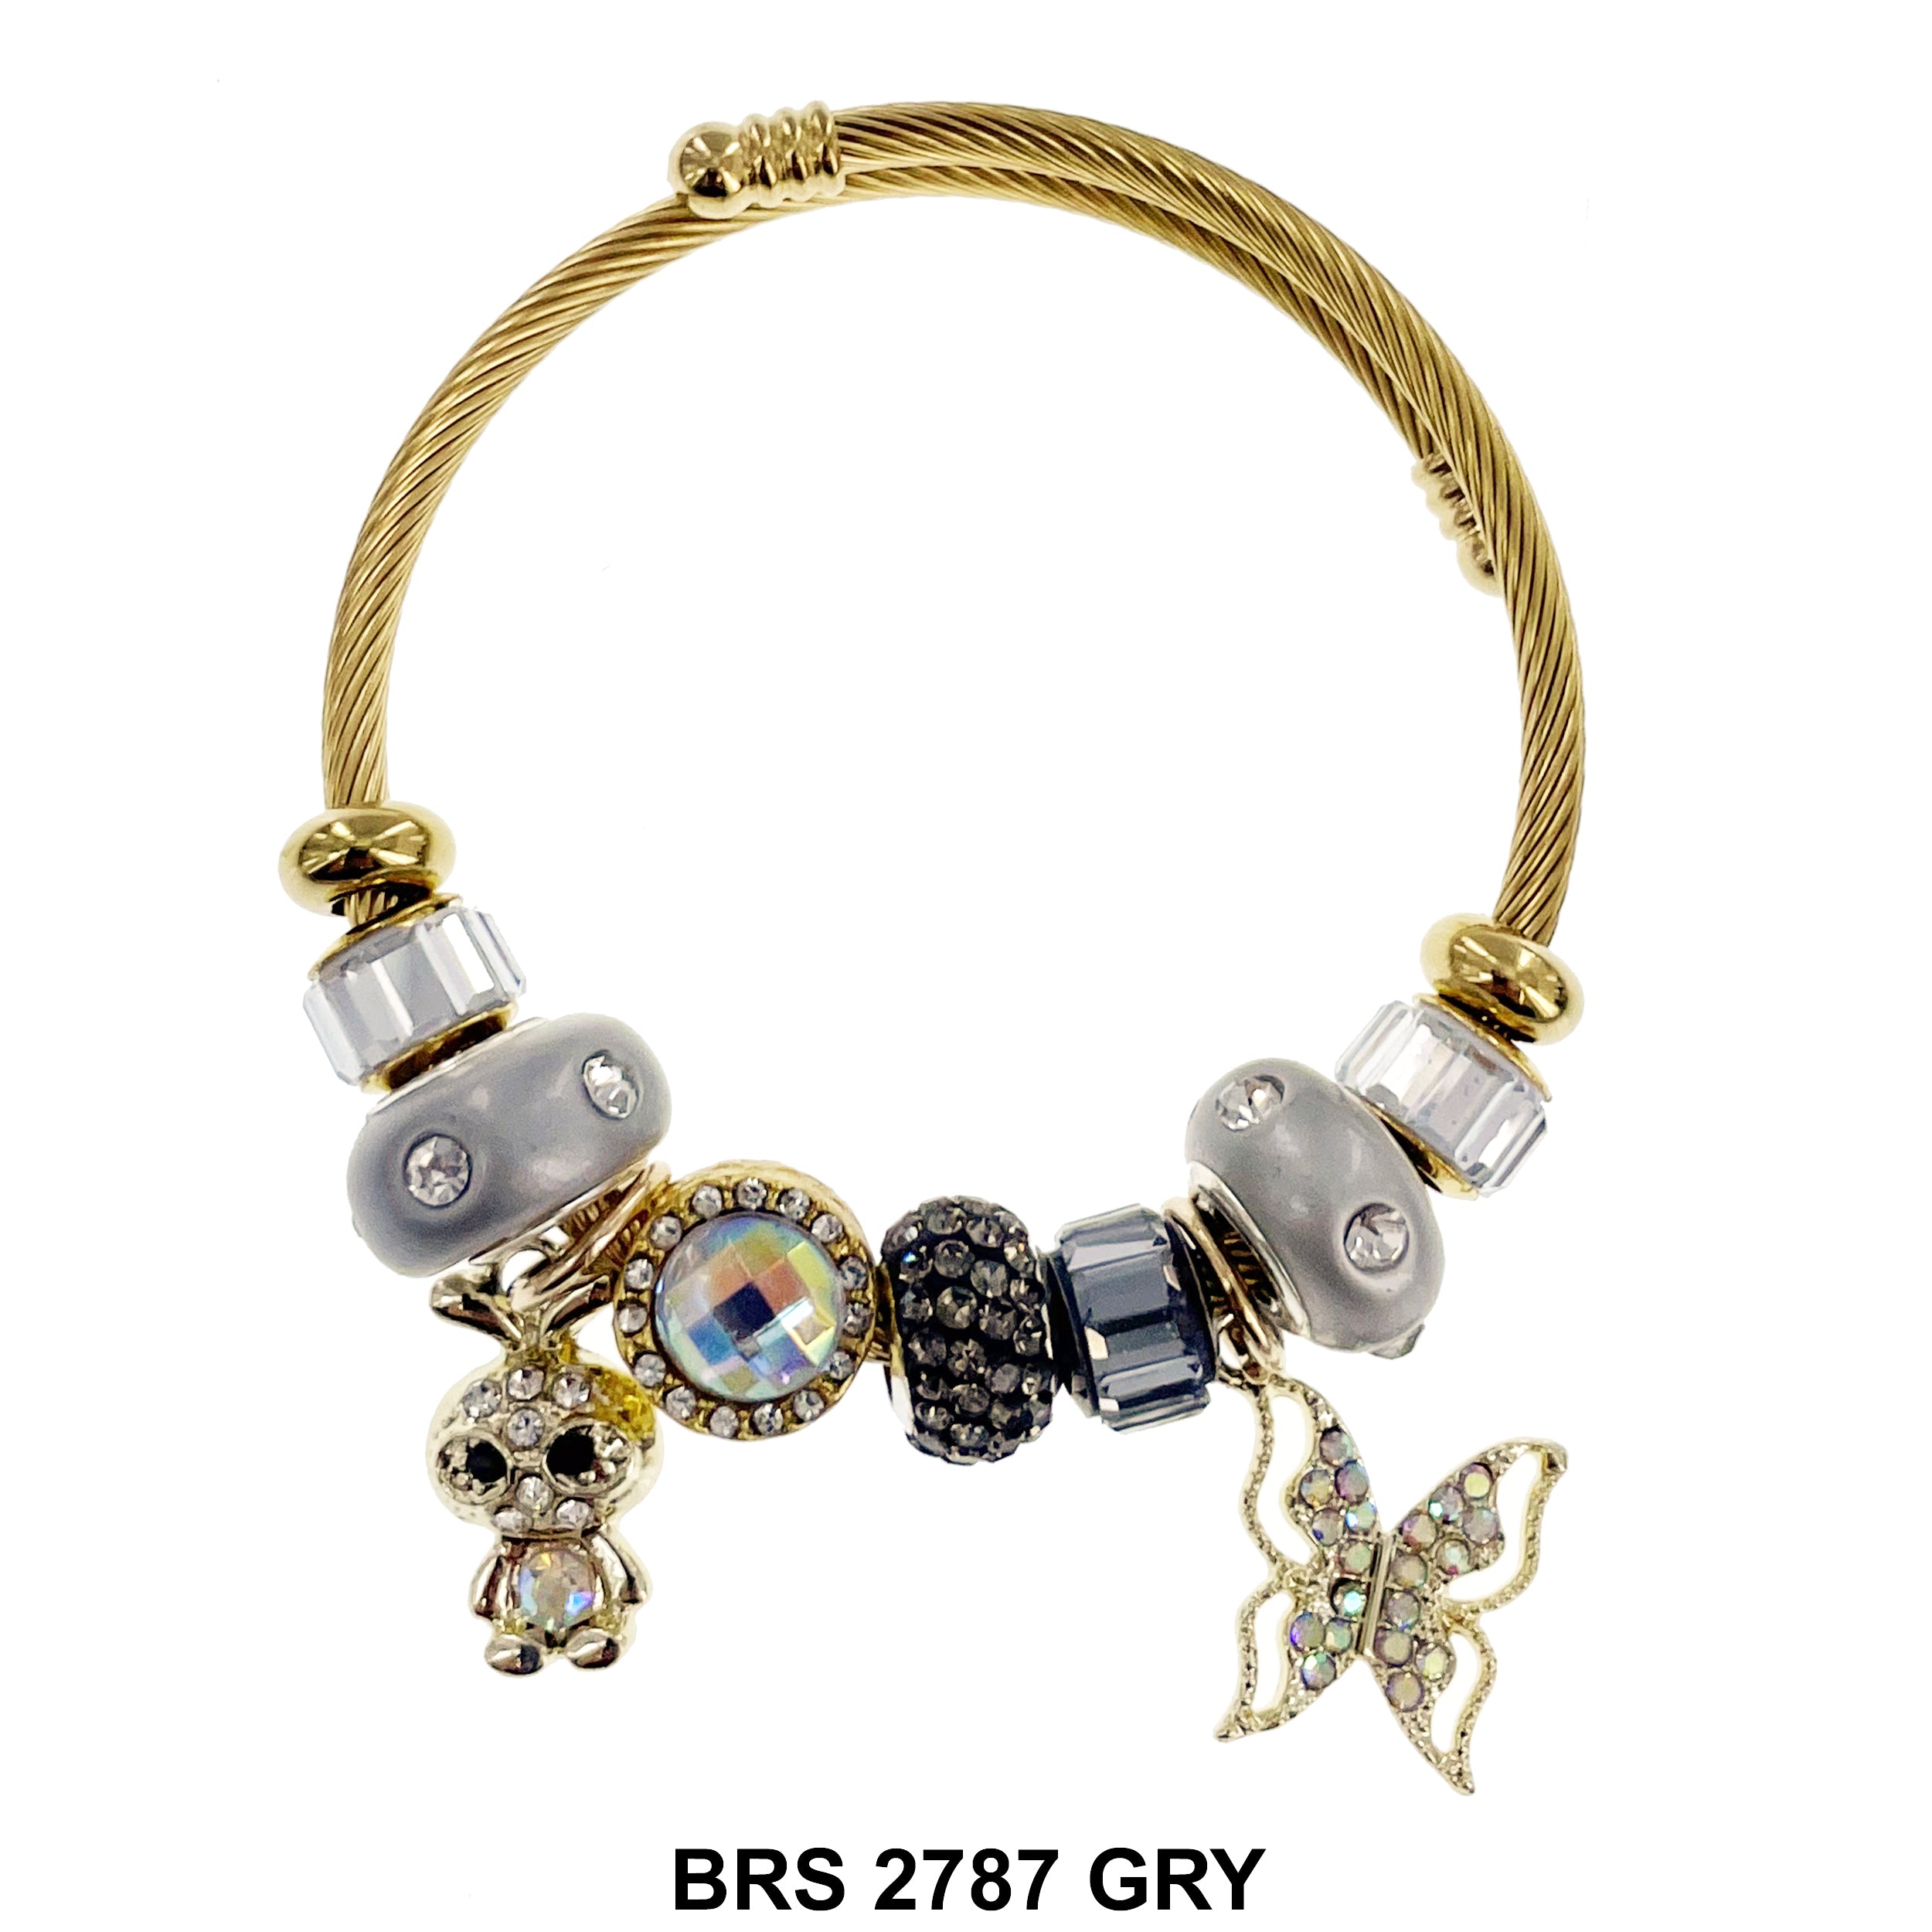 Hanging Charm Bracelet BRS 2787 GRY